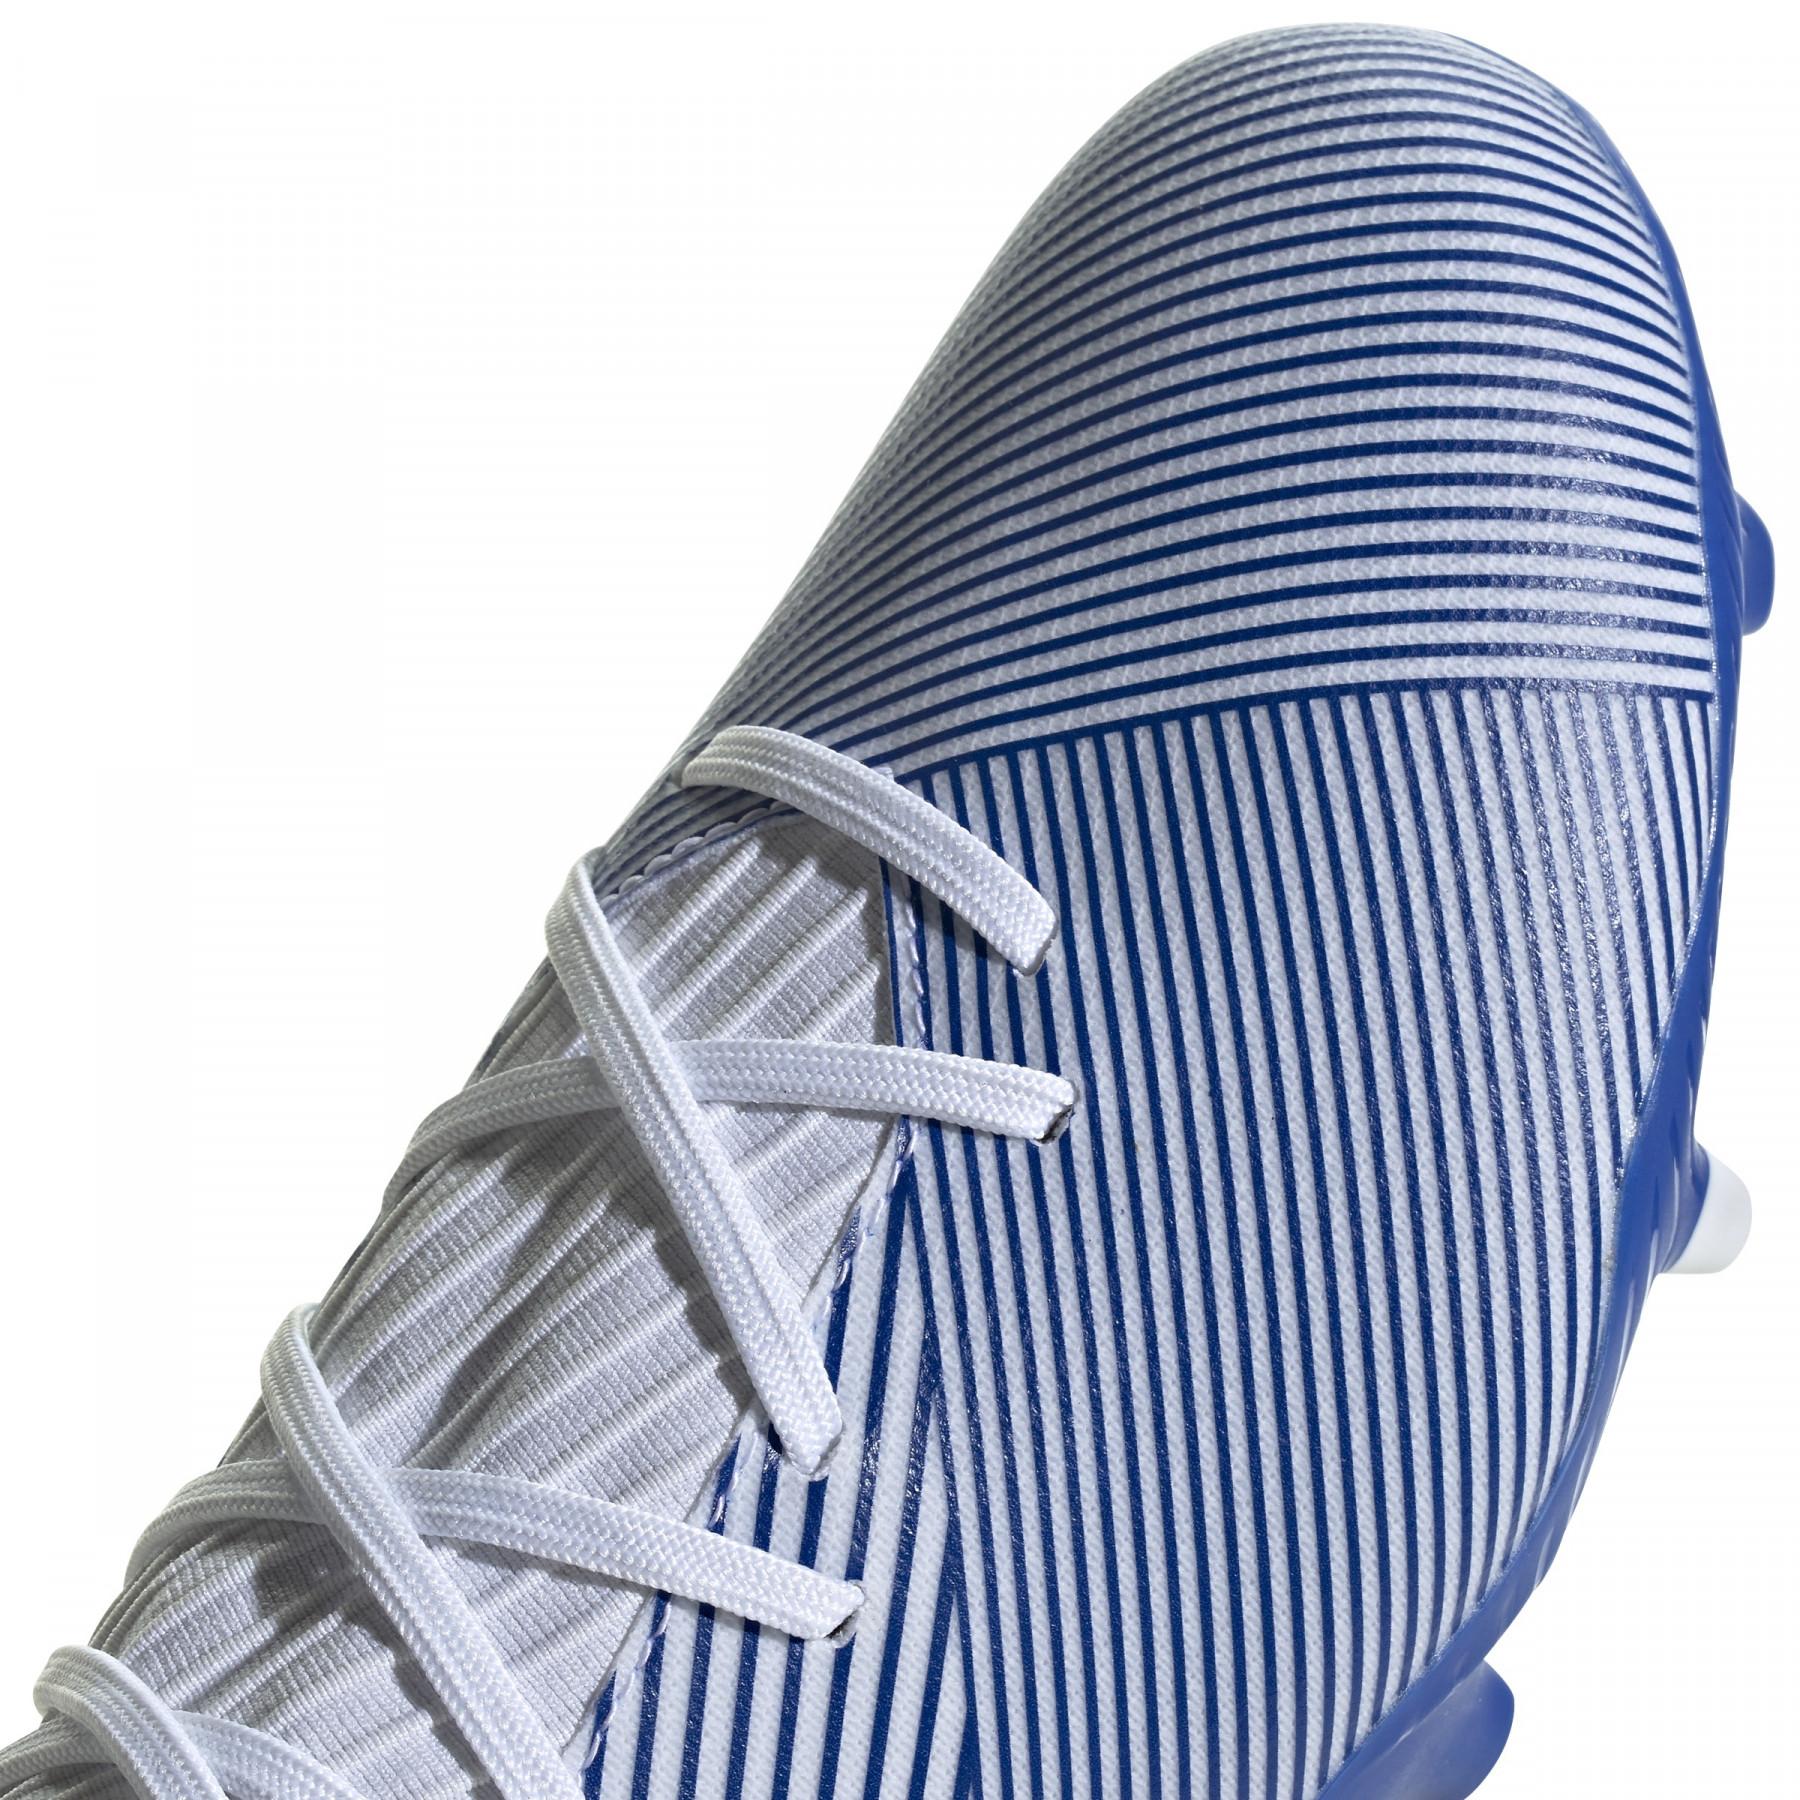 Chaussures de football adidas Nemeziz 19.3 FG